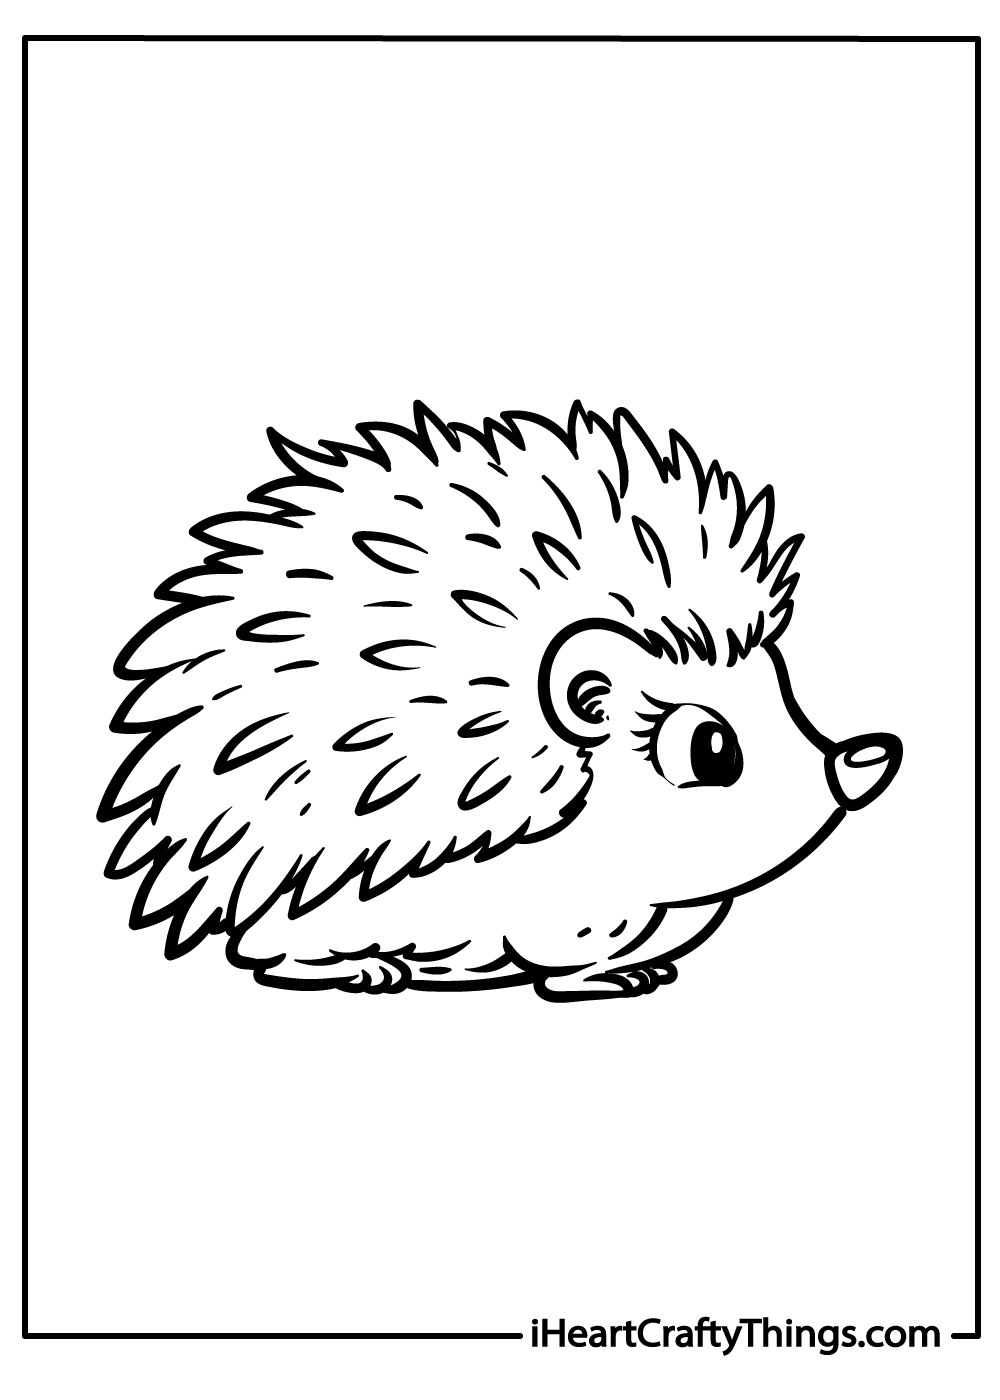 Hedgehog coloring pages free printables